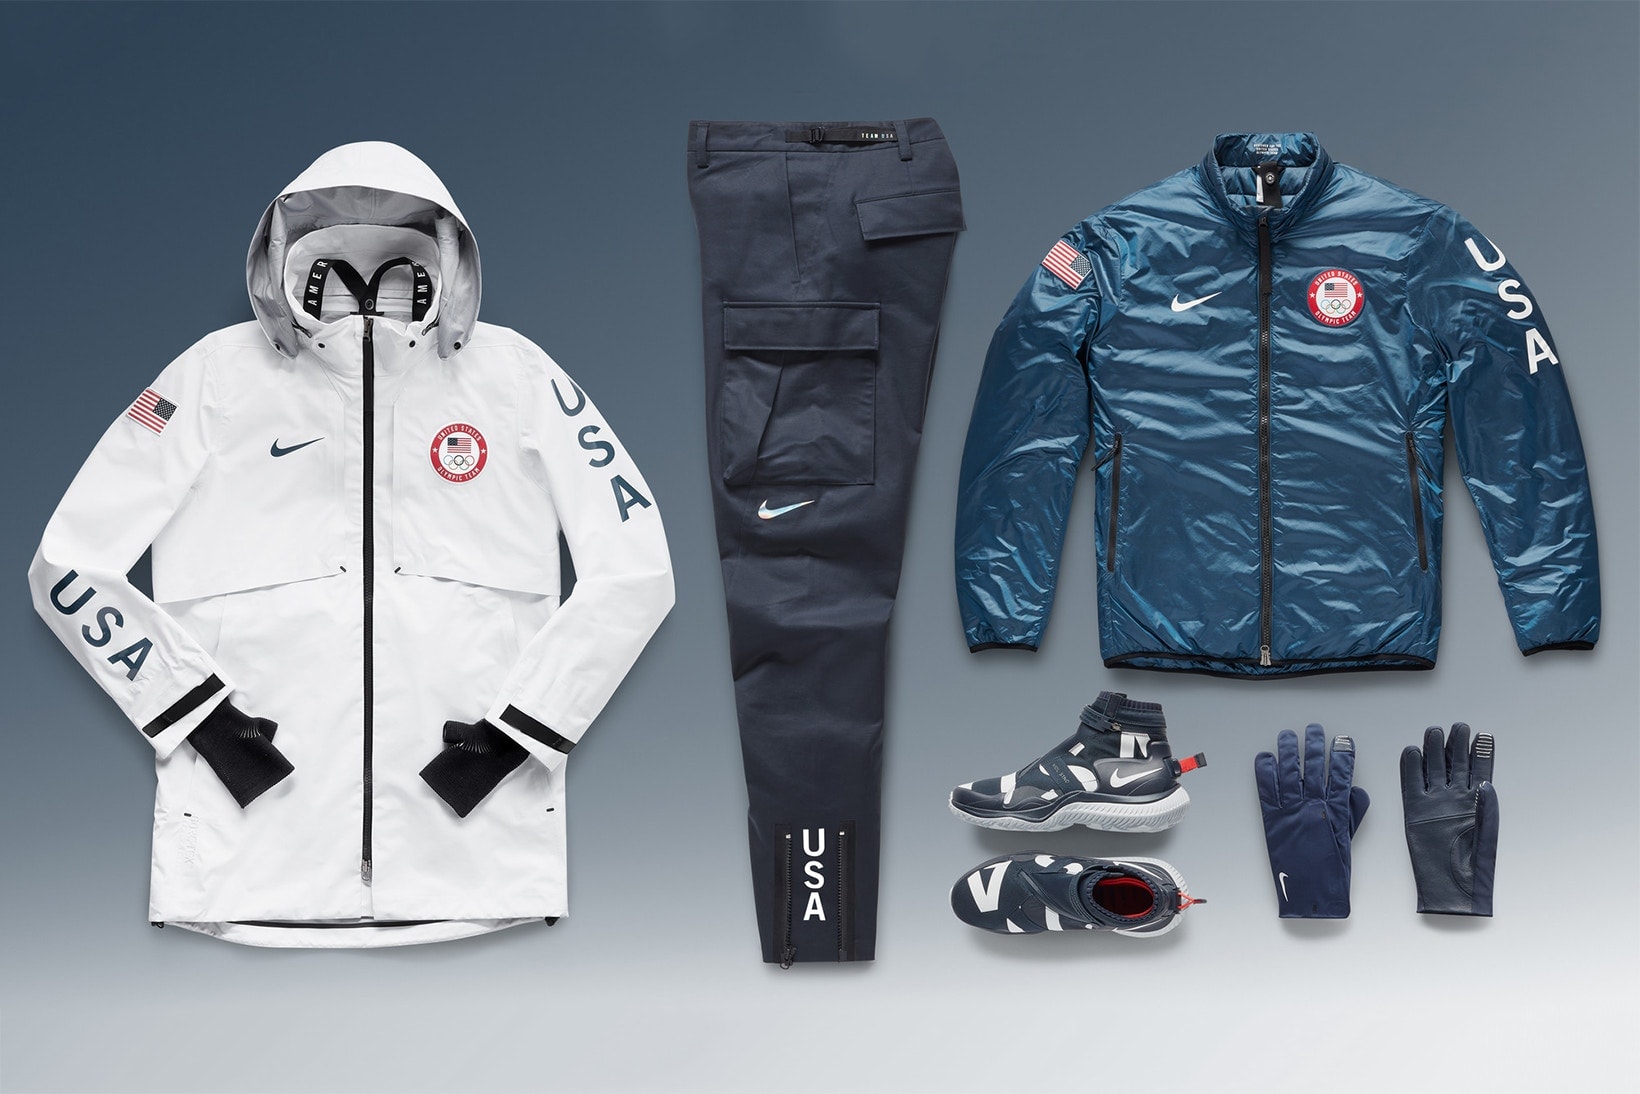 Nike が平昌五輪に出場するアメリカ代表選手のために制作した “Medal Stand” コレクションをチェック　ナイキ HYPEBEAST ハイプビースト